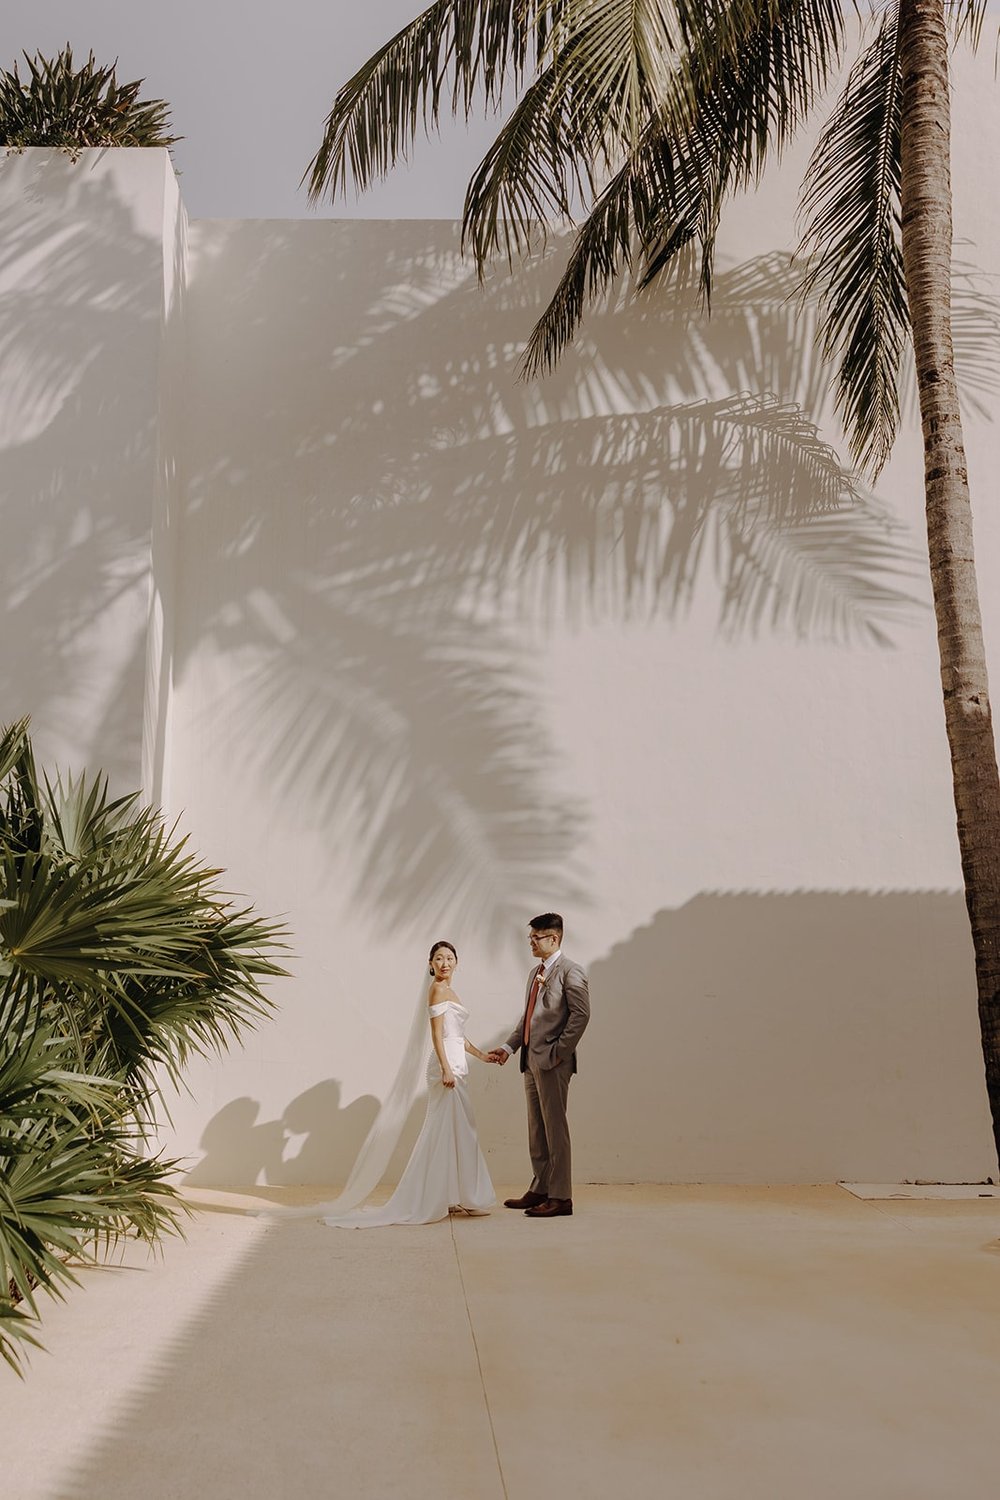 Bride and groom wedding photos at Cancun resort wedding